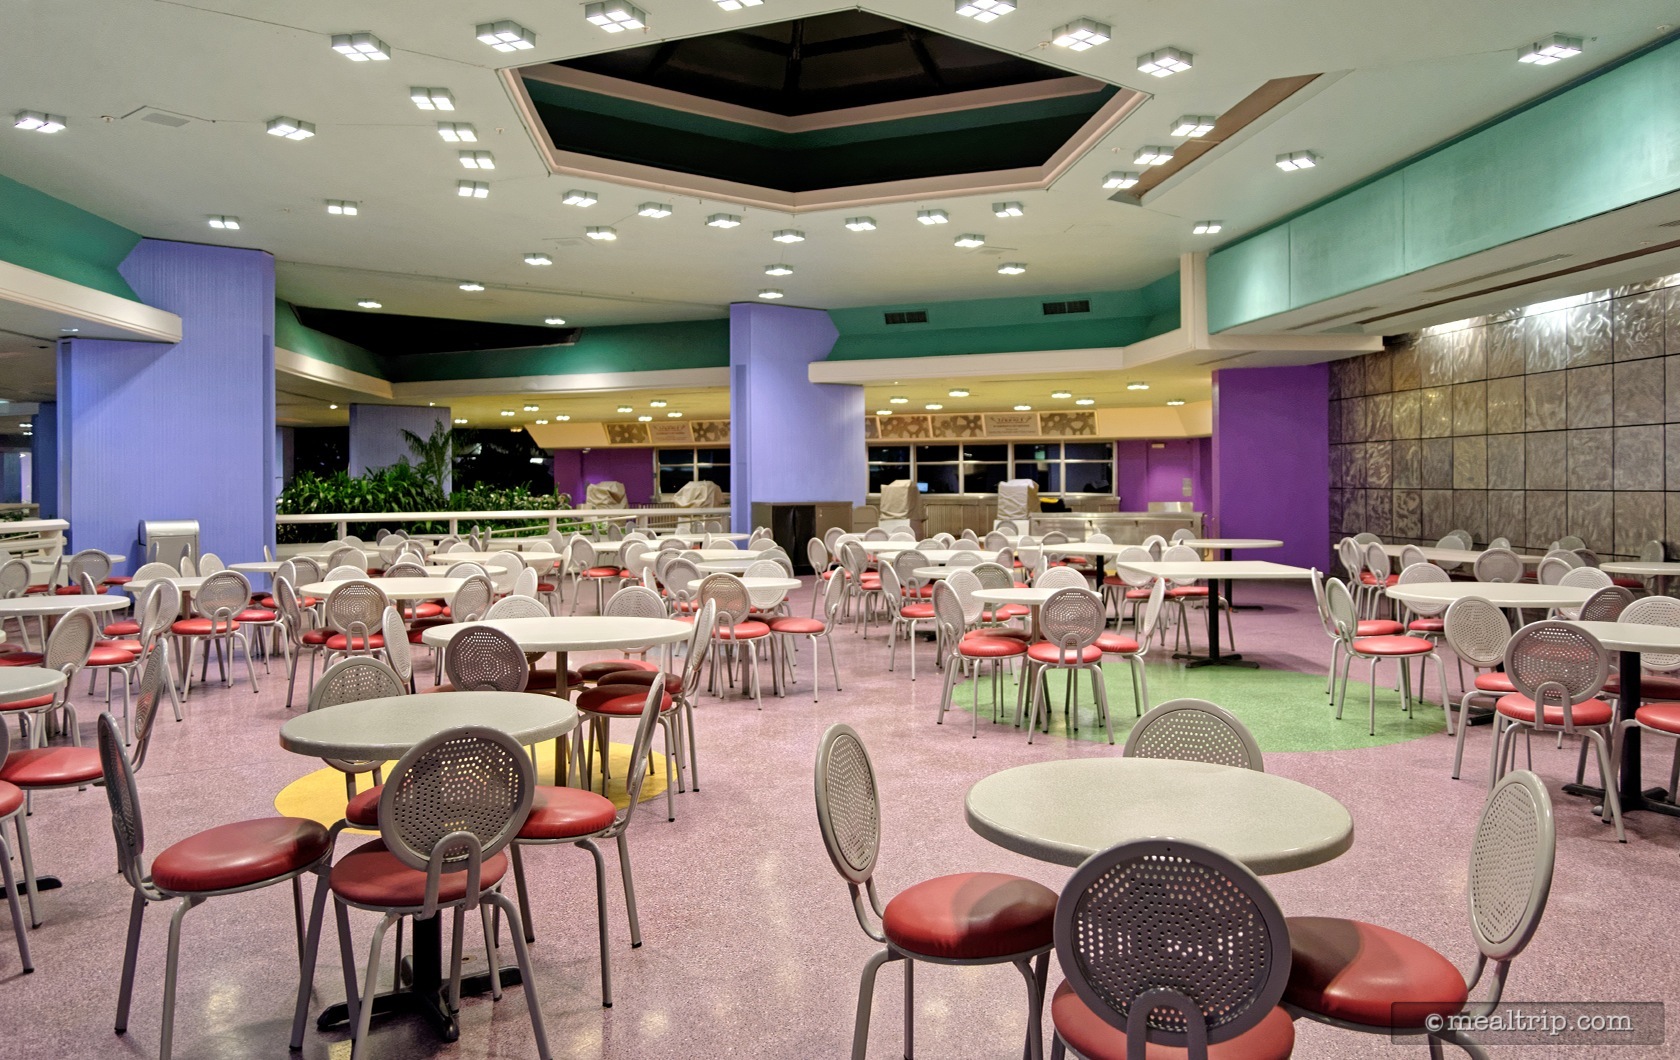 Photo Gallery for Tomorrowland Terrace Restaurant at Magic Kingdom